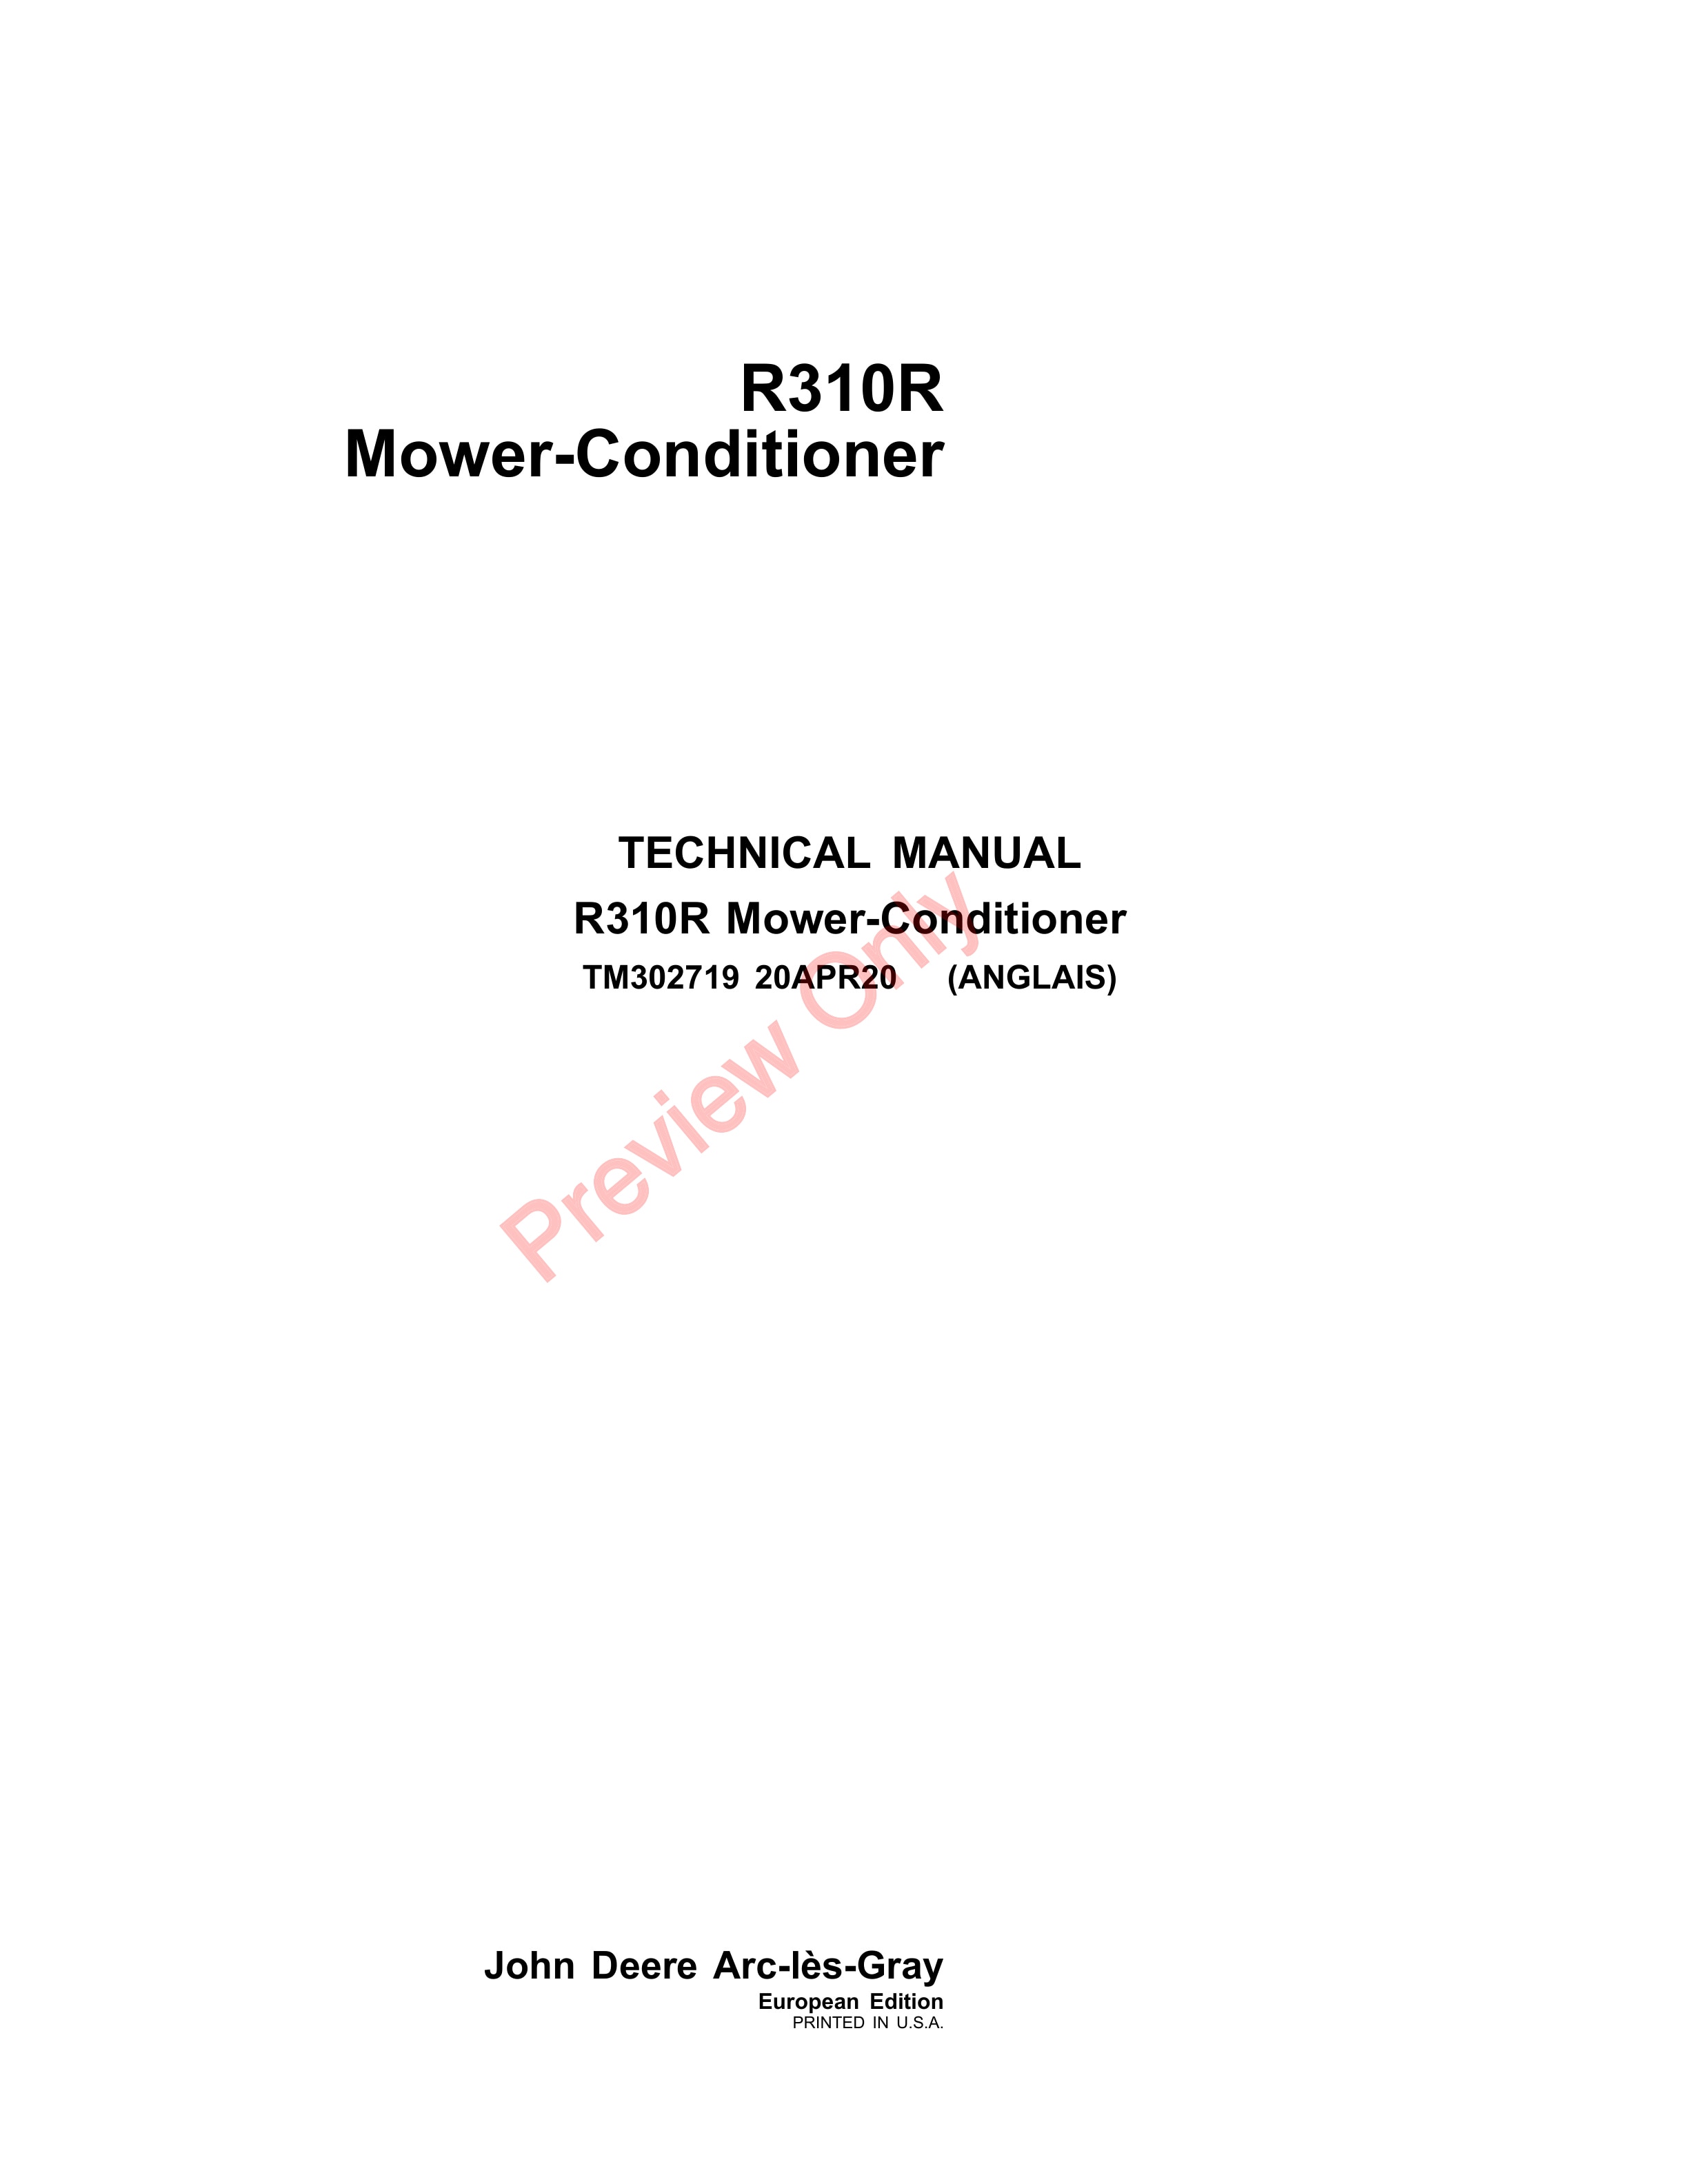 John Deere R310R Mower Conditioner Technical Manual TM302719 20APR20 1